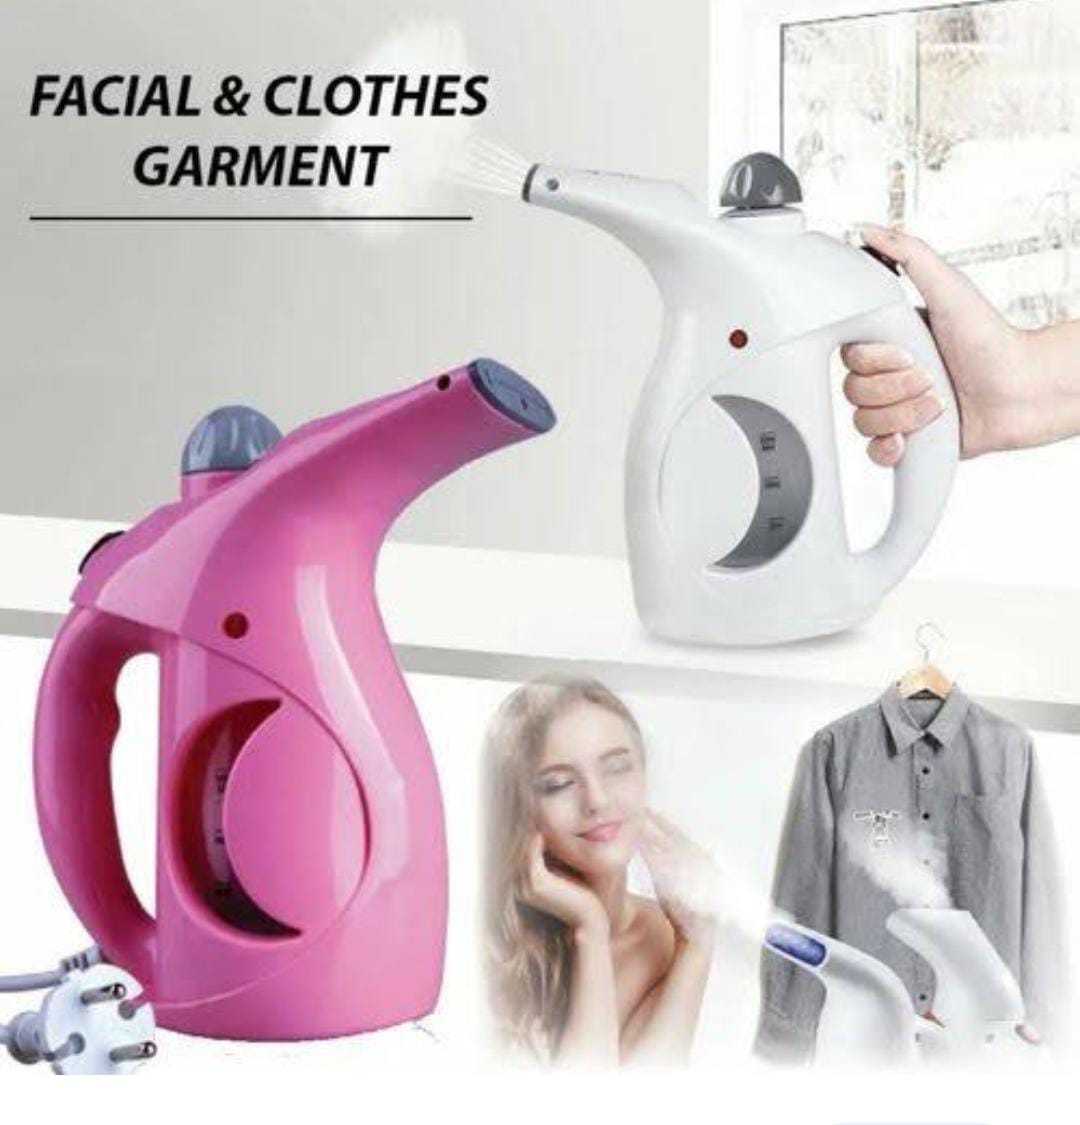 Facial / garment steamer -l